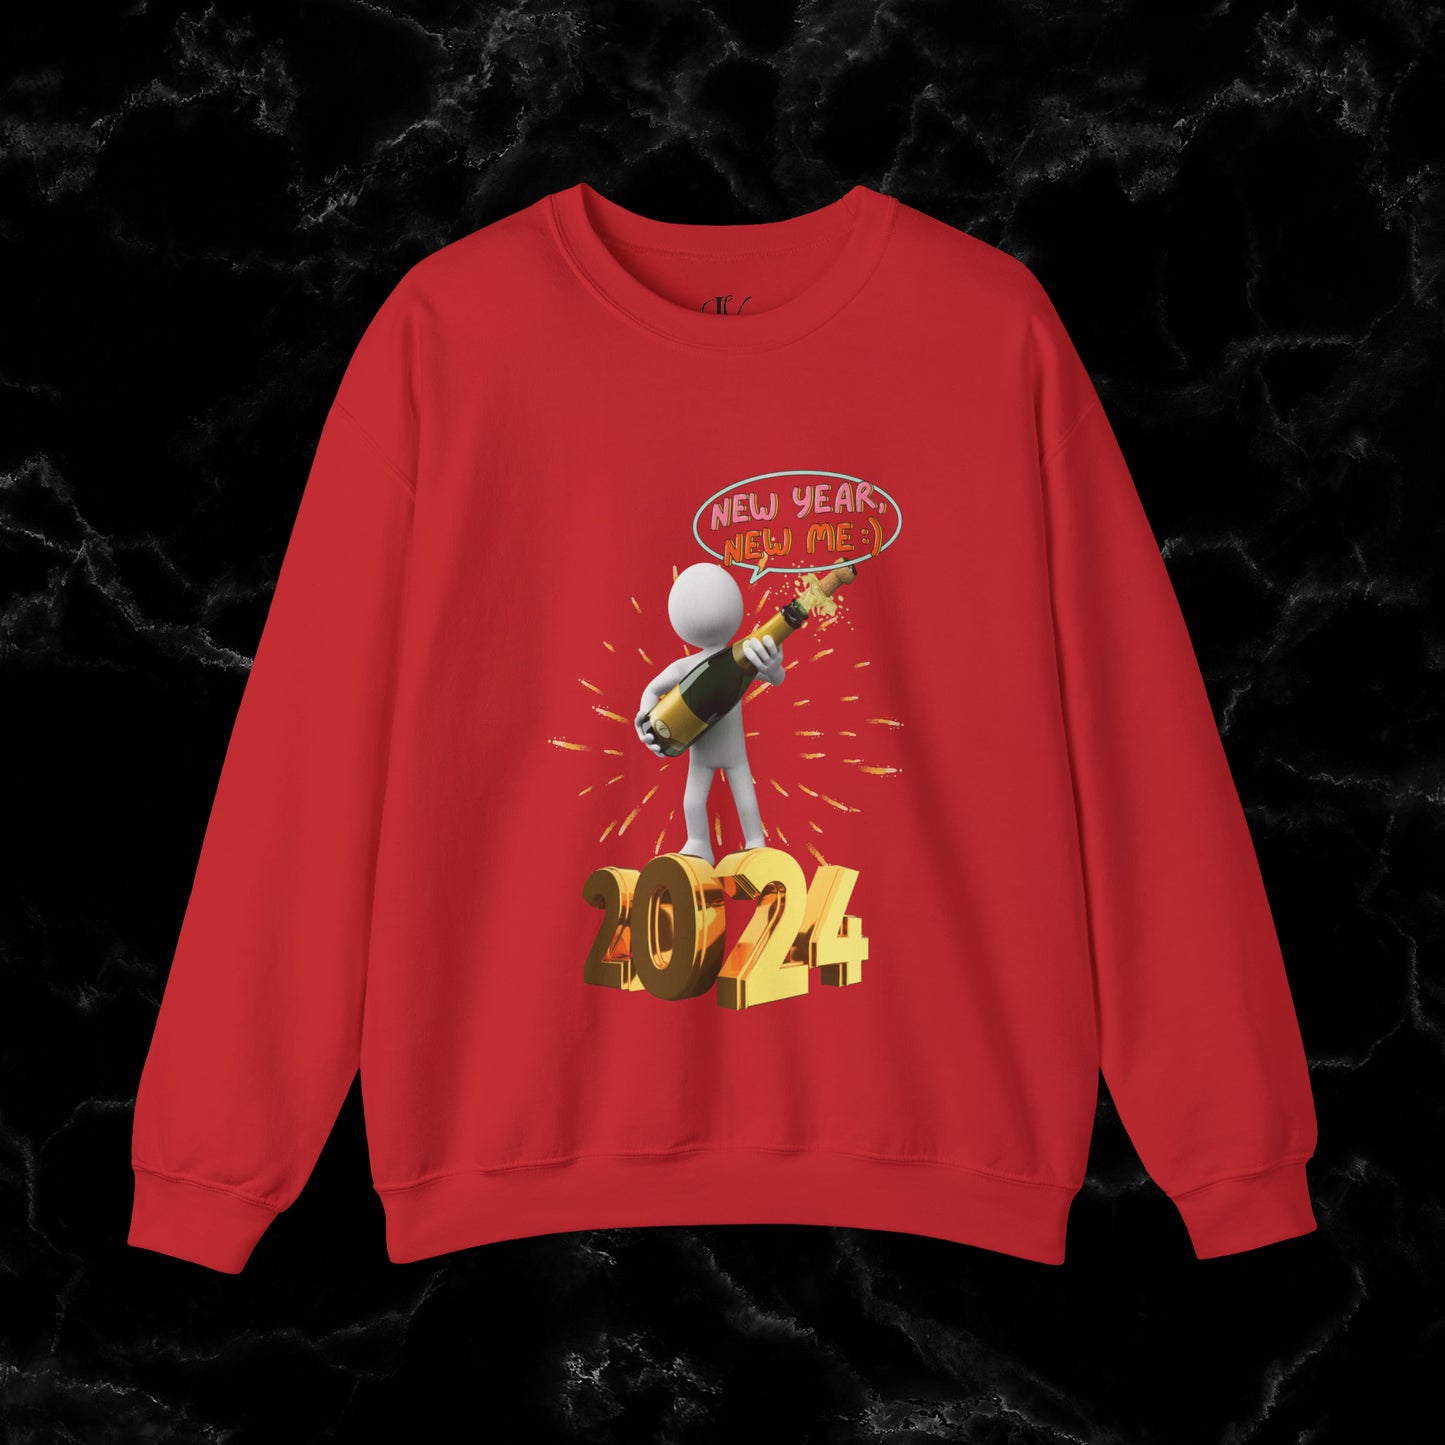 New Year New Me Sweatshirt - Motivational, Inspirational Resolutions Shirt, Christmas Family Tee Sweatshirt S Red 